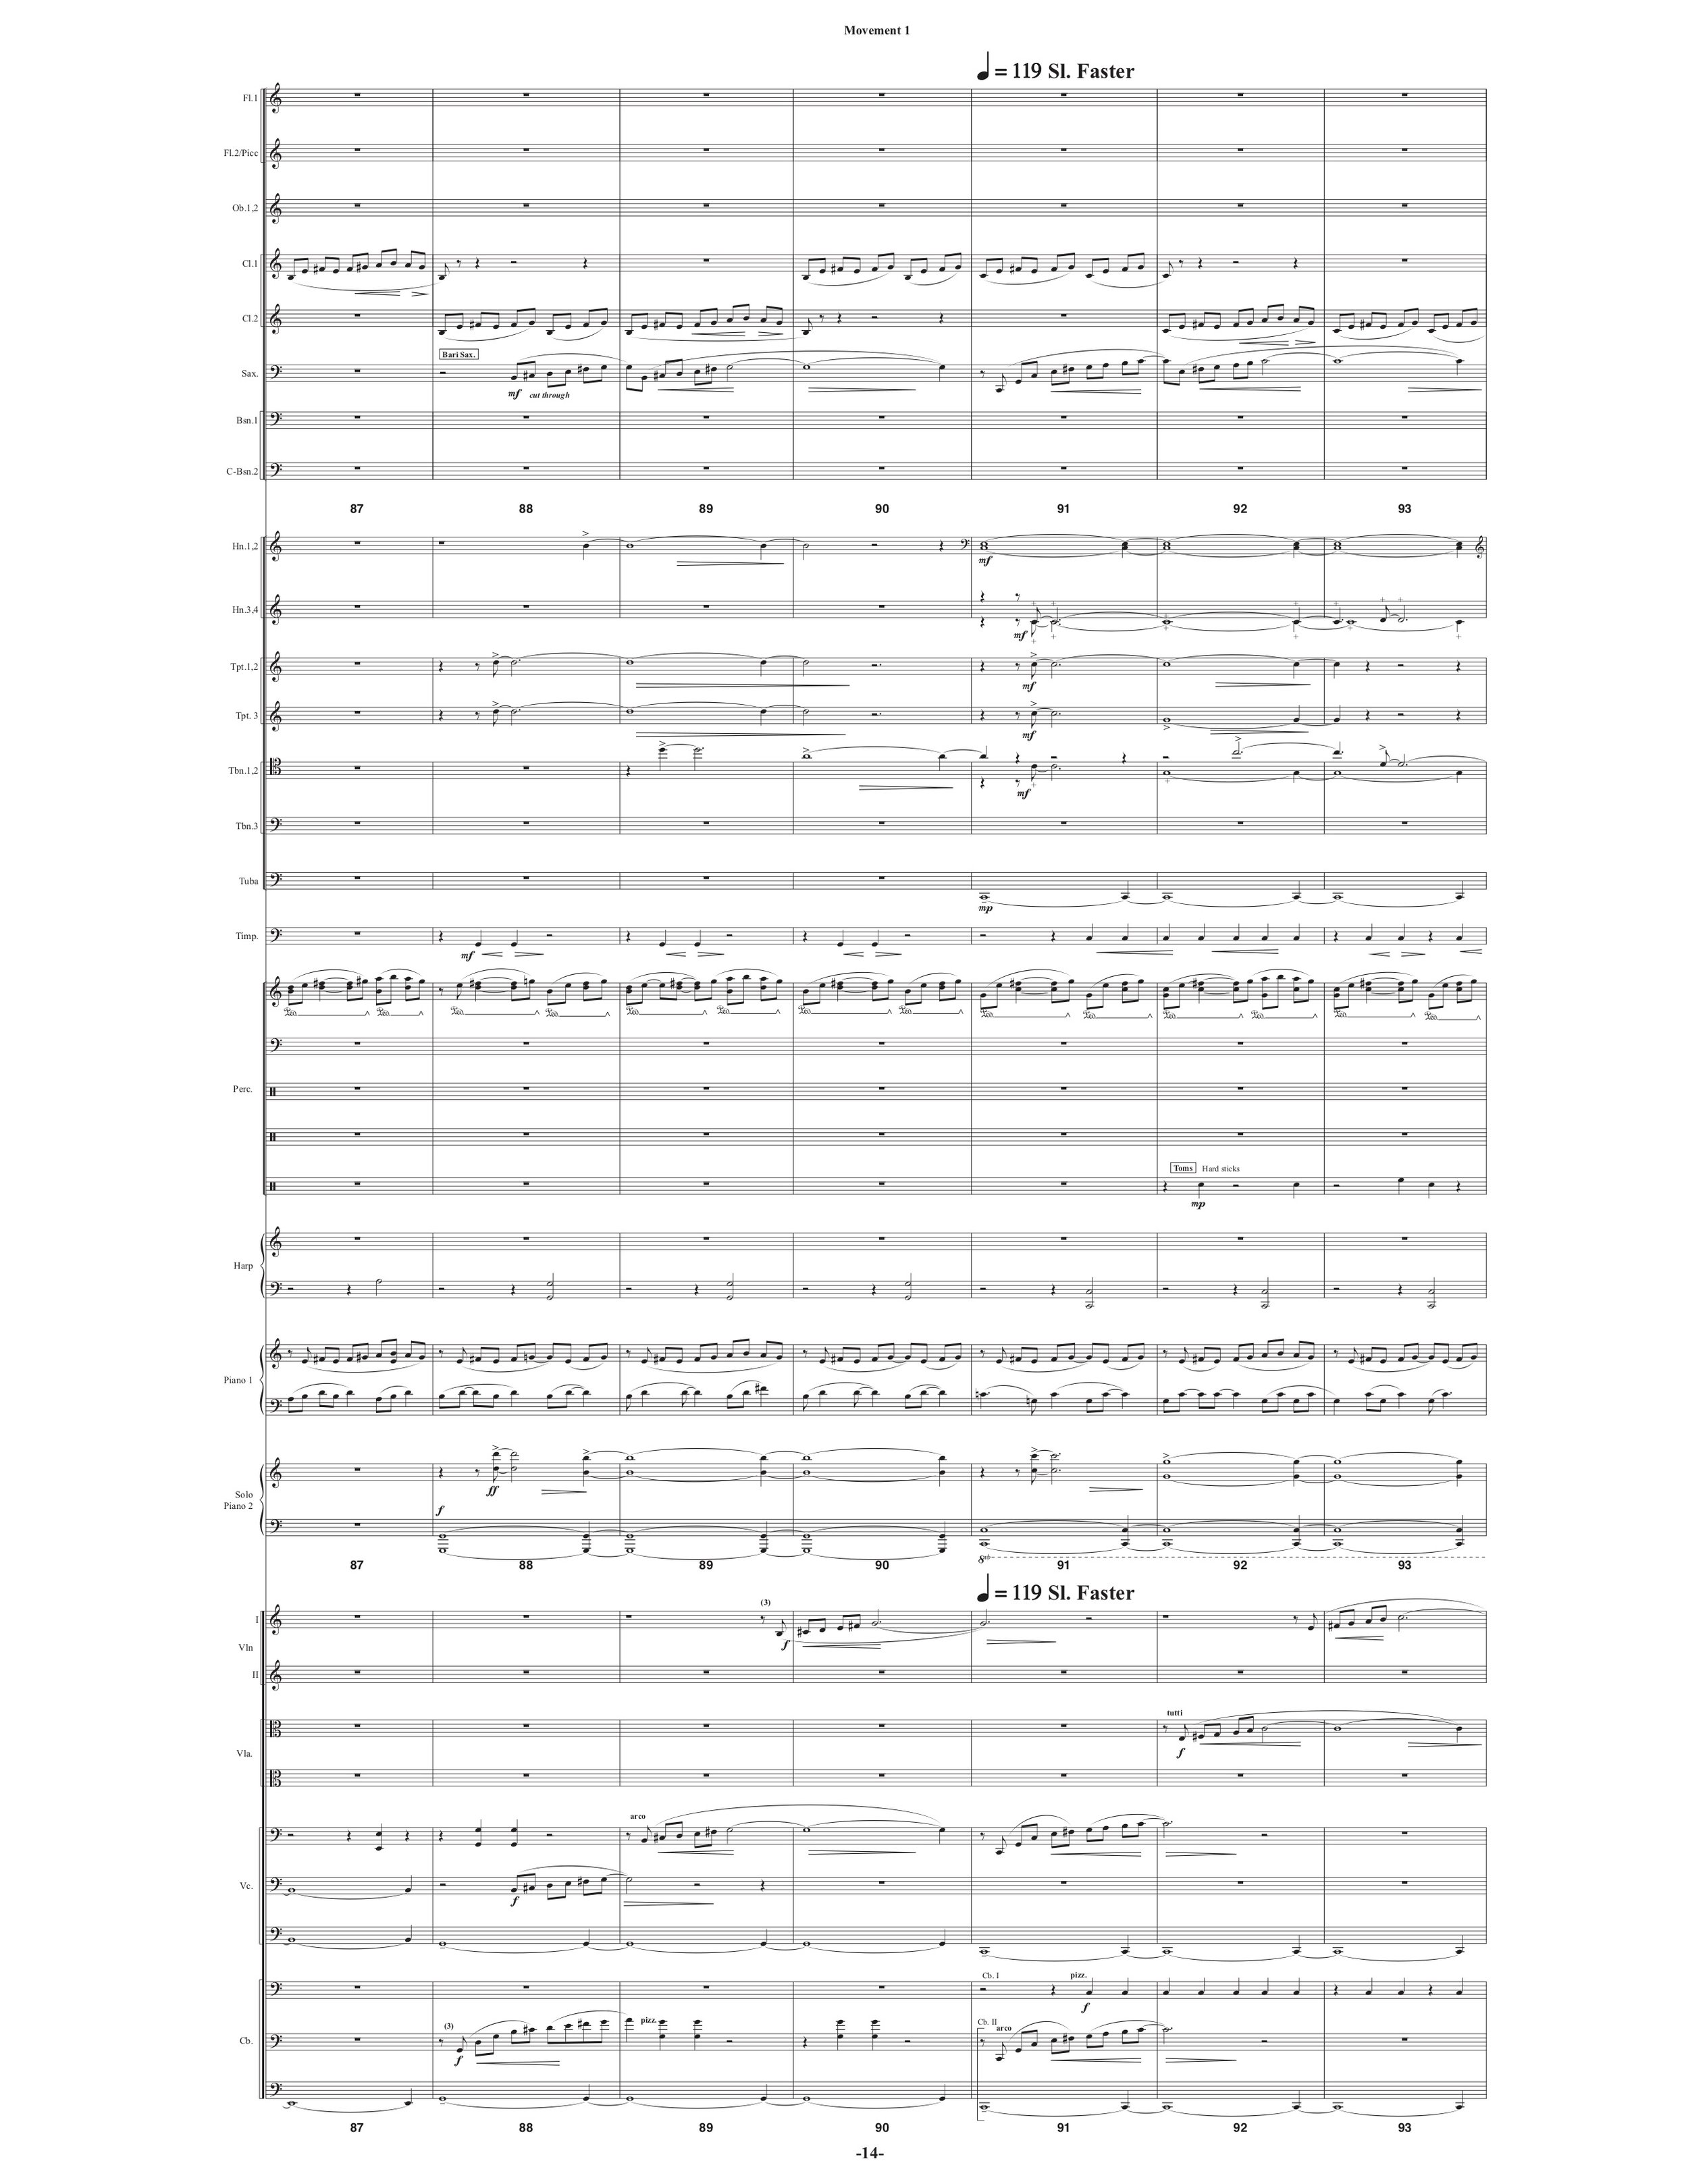 Symphony_Orch & 2 Pianos p19.jpg